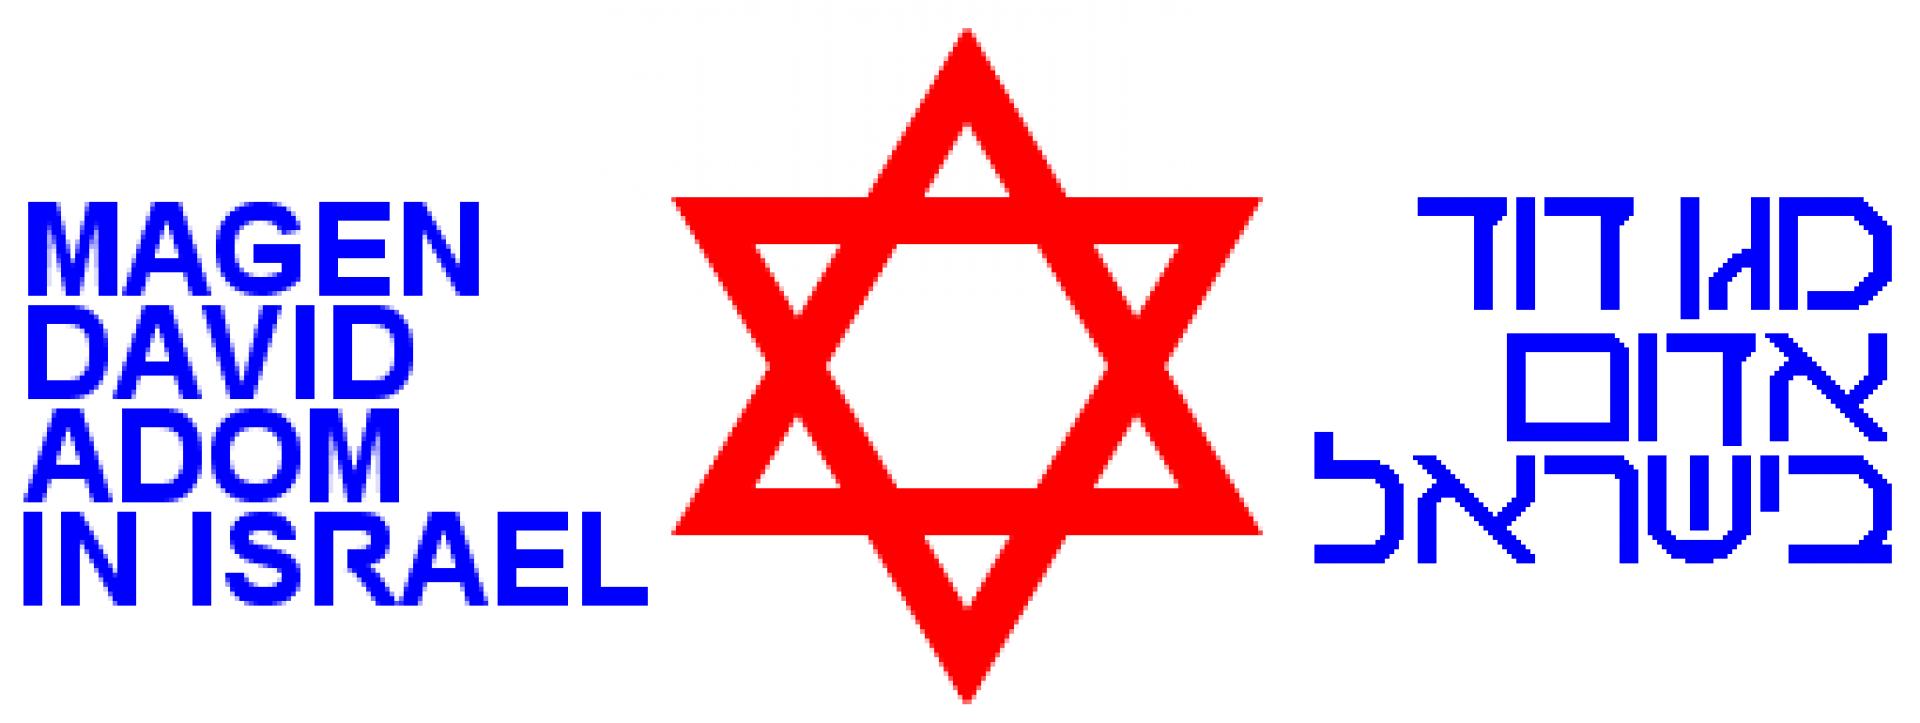 Magen David Adom ((Hebreews: מגן‎ דוד‎ אדום, afk. MDA) logo